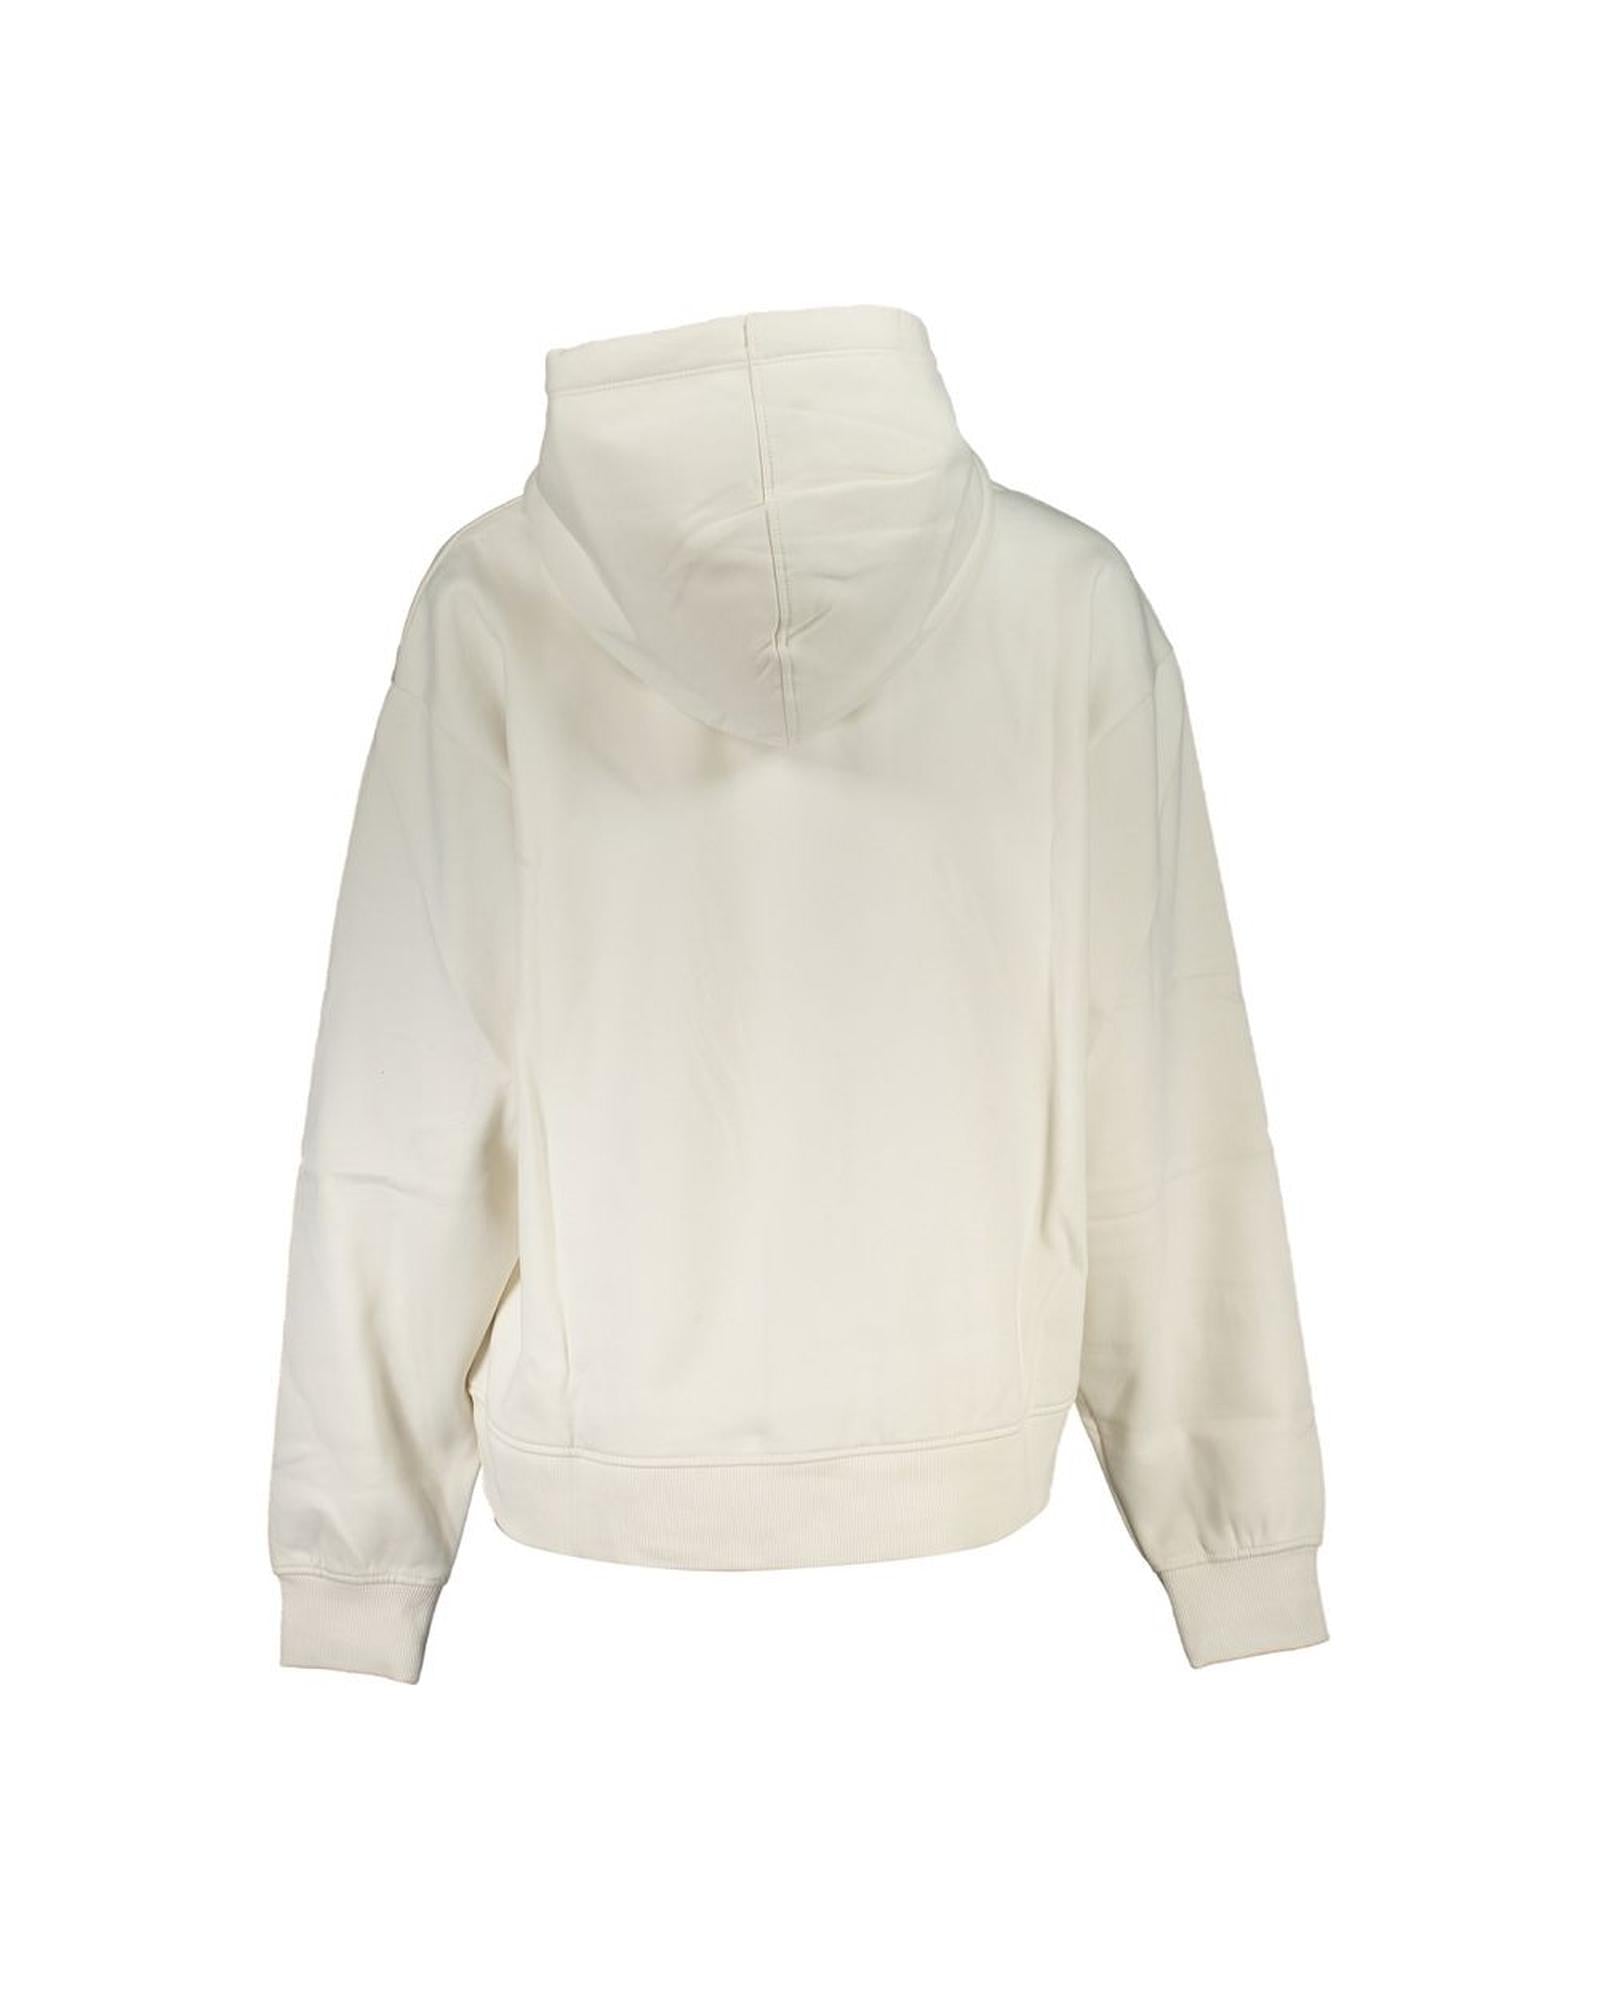 Women's White Cotton Sweater - S